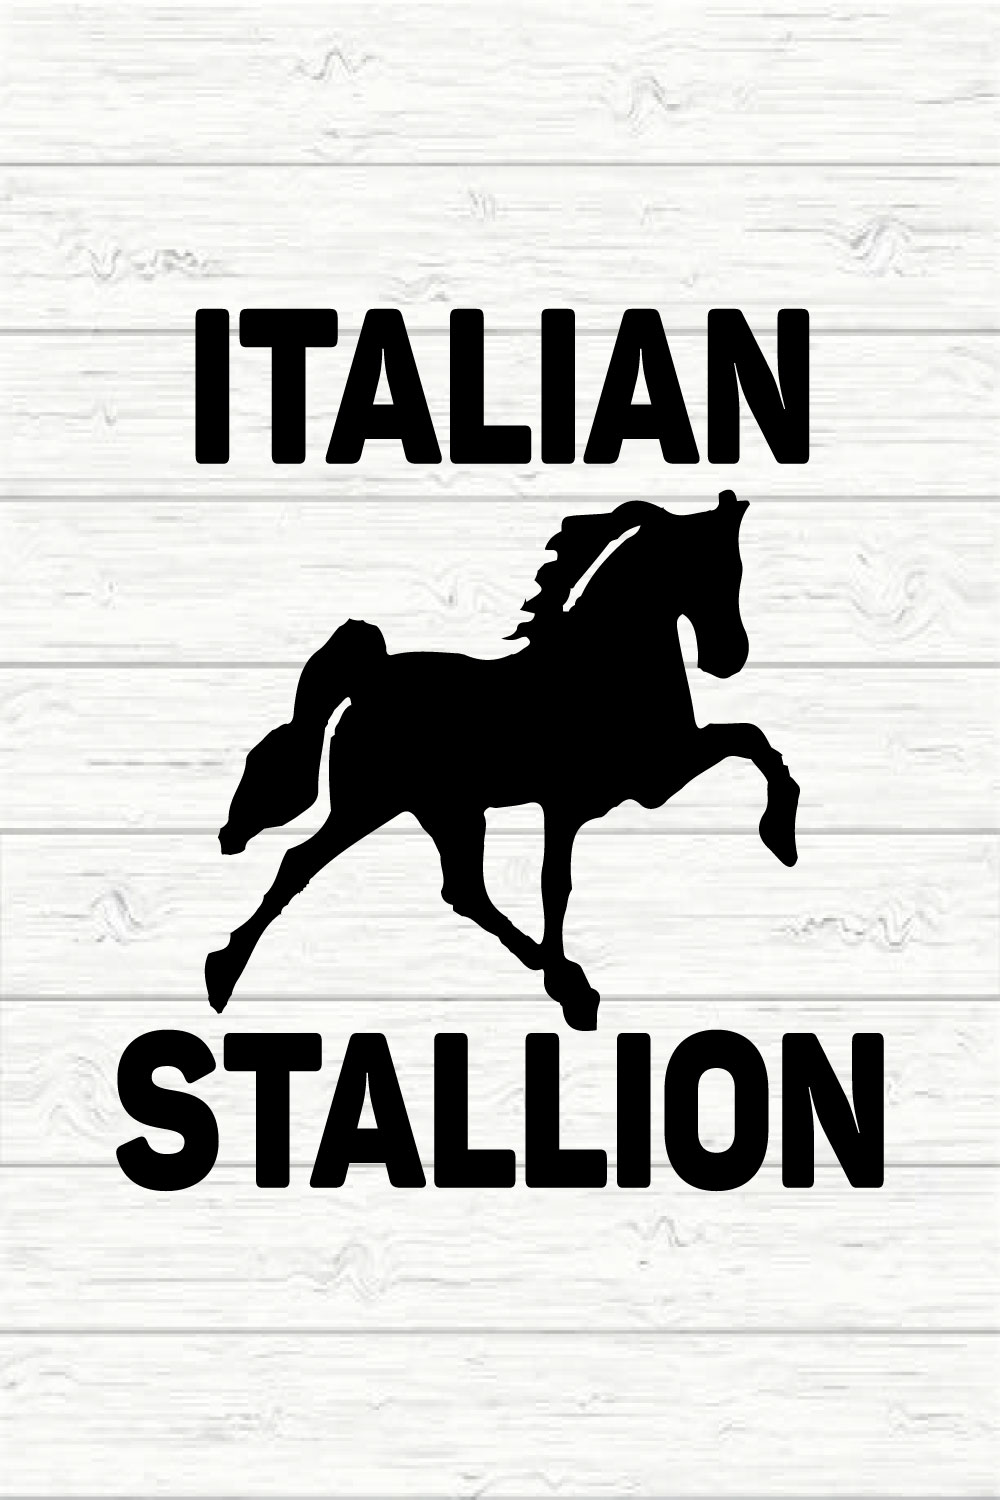 Italian stallion pinterest preview image.